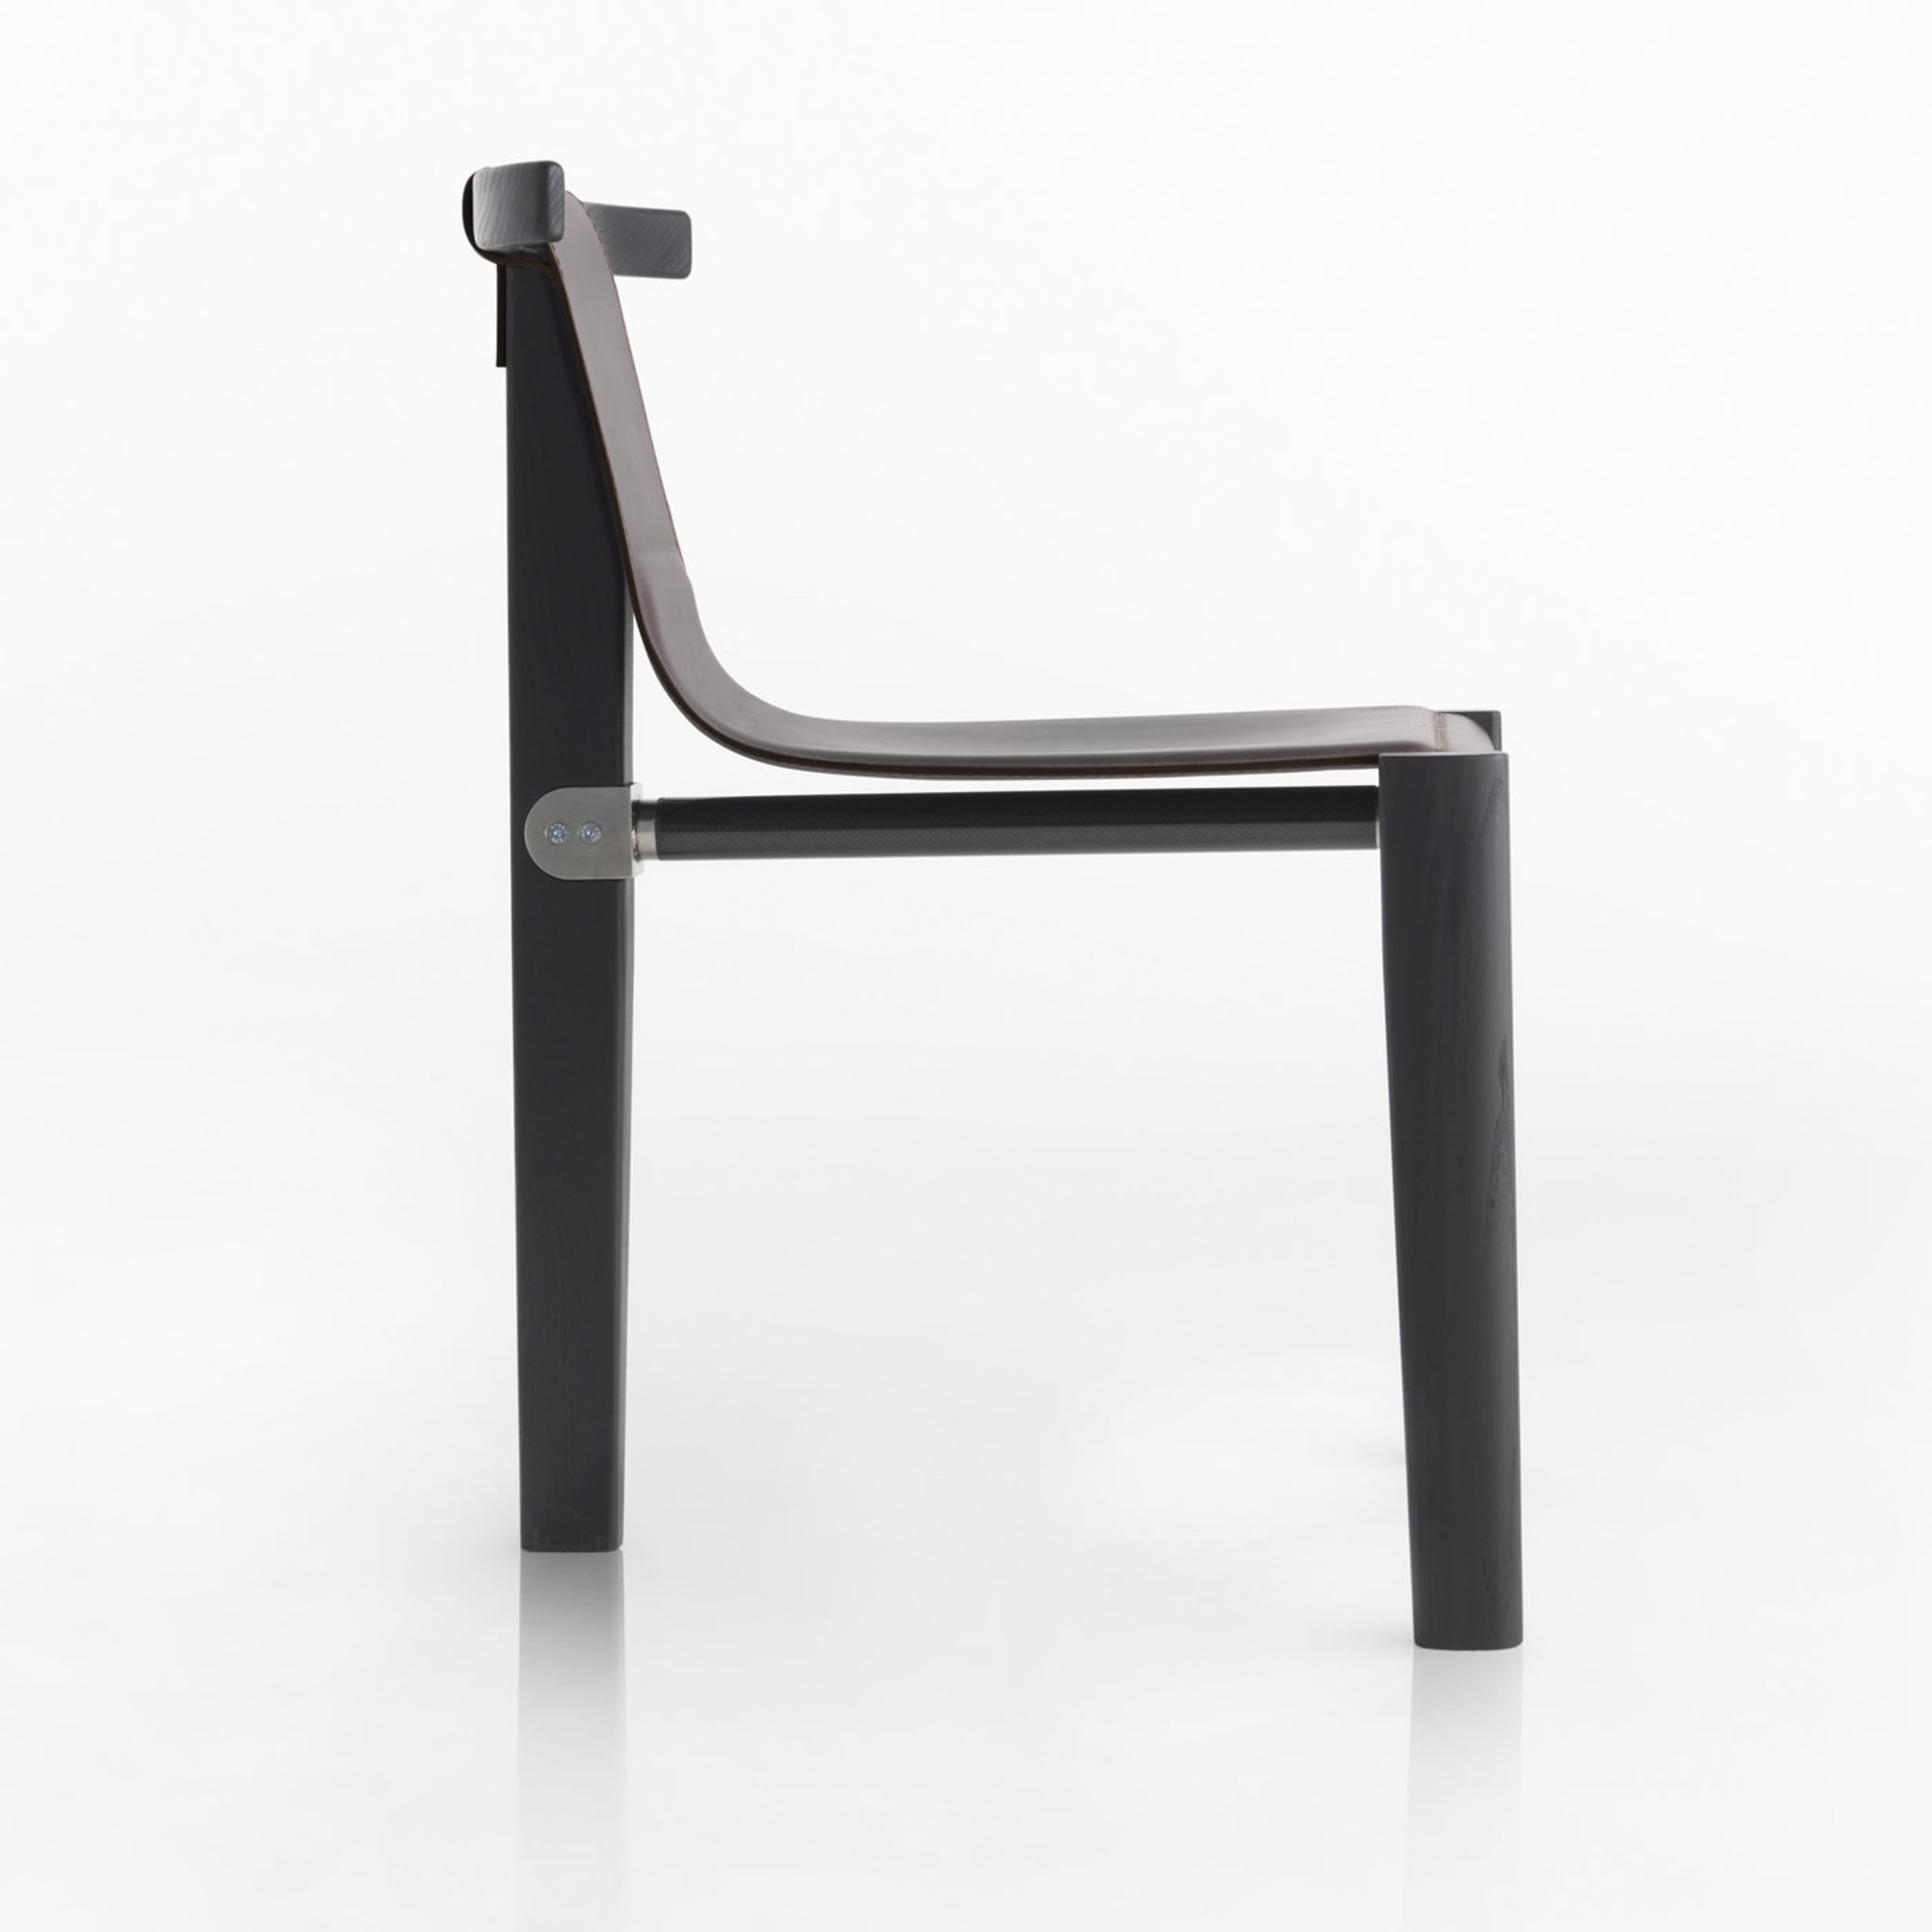 Pablita Brauner Stuhl von Marcello Pozzi - Alternative Ansicht 4